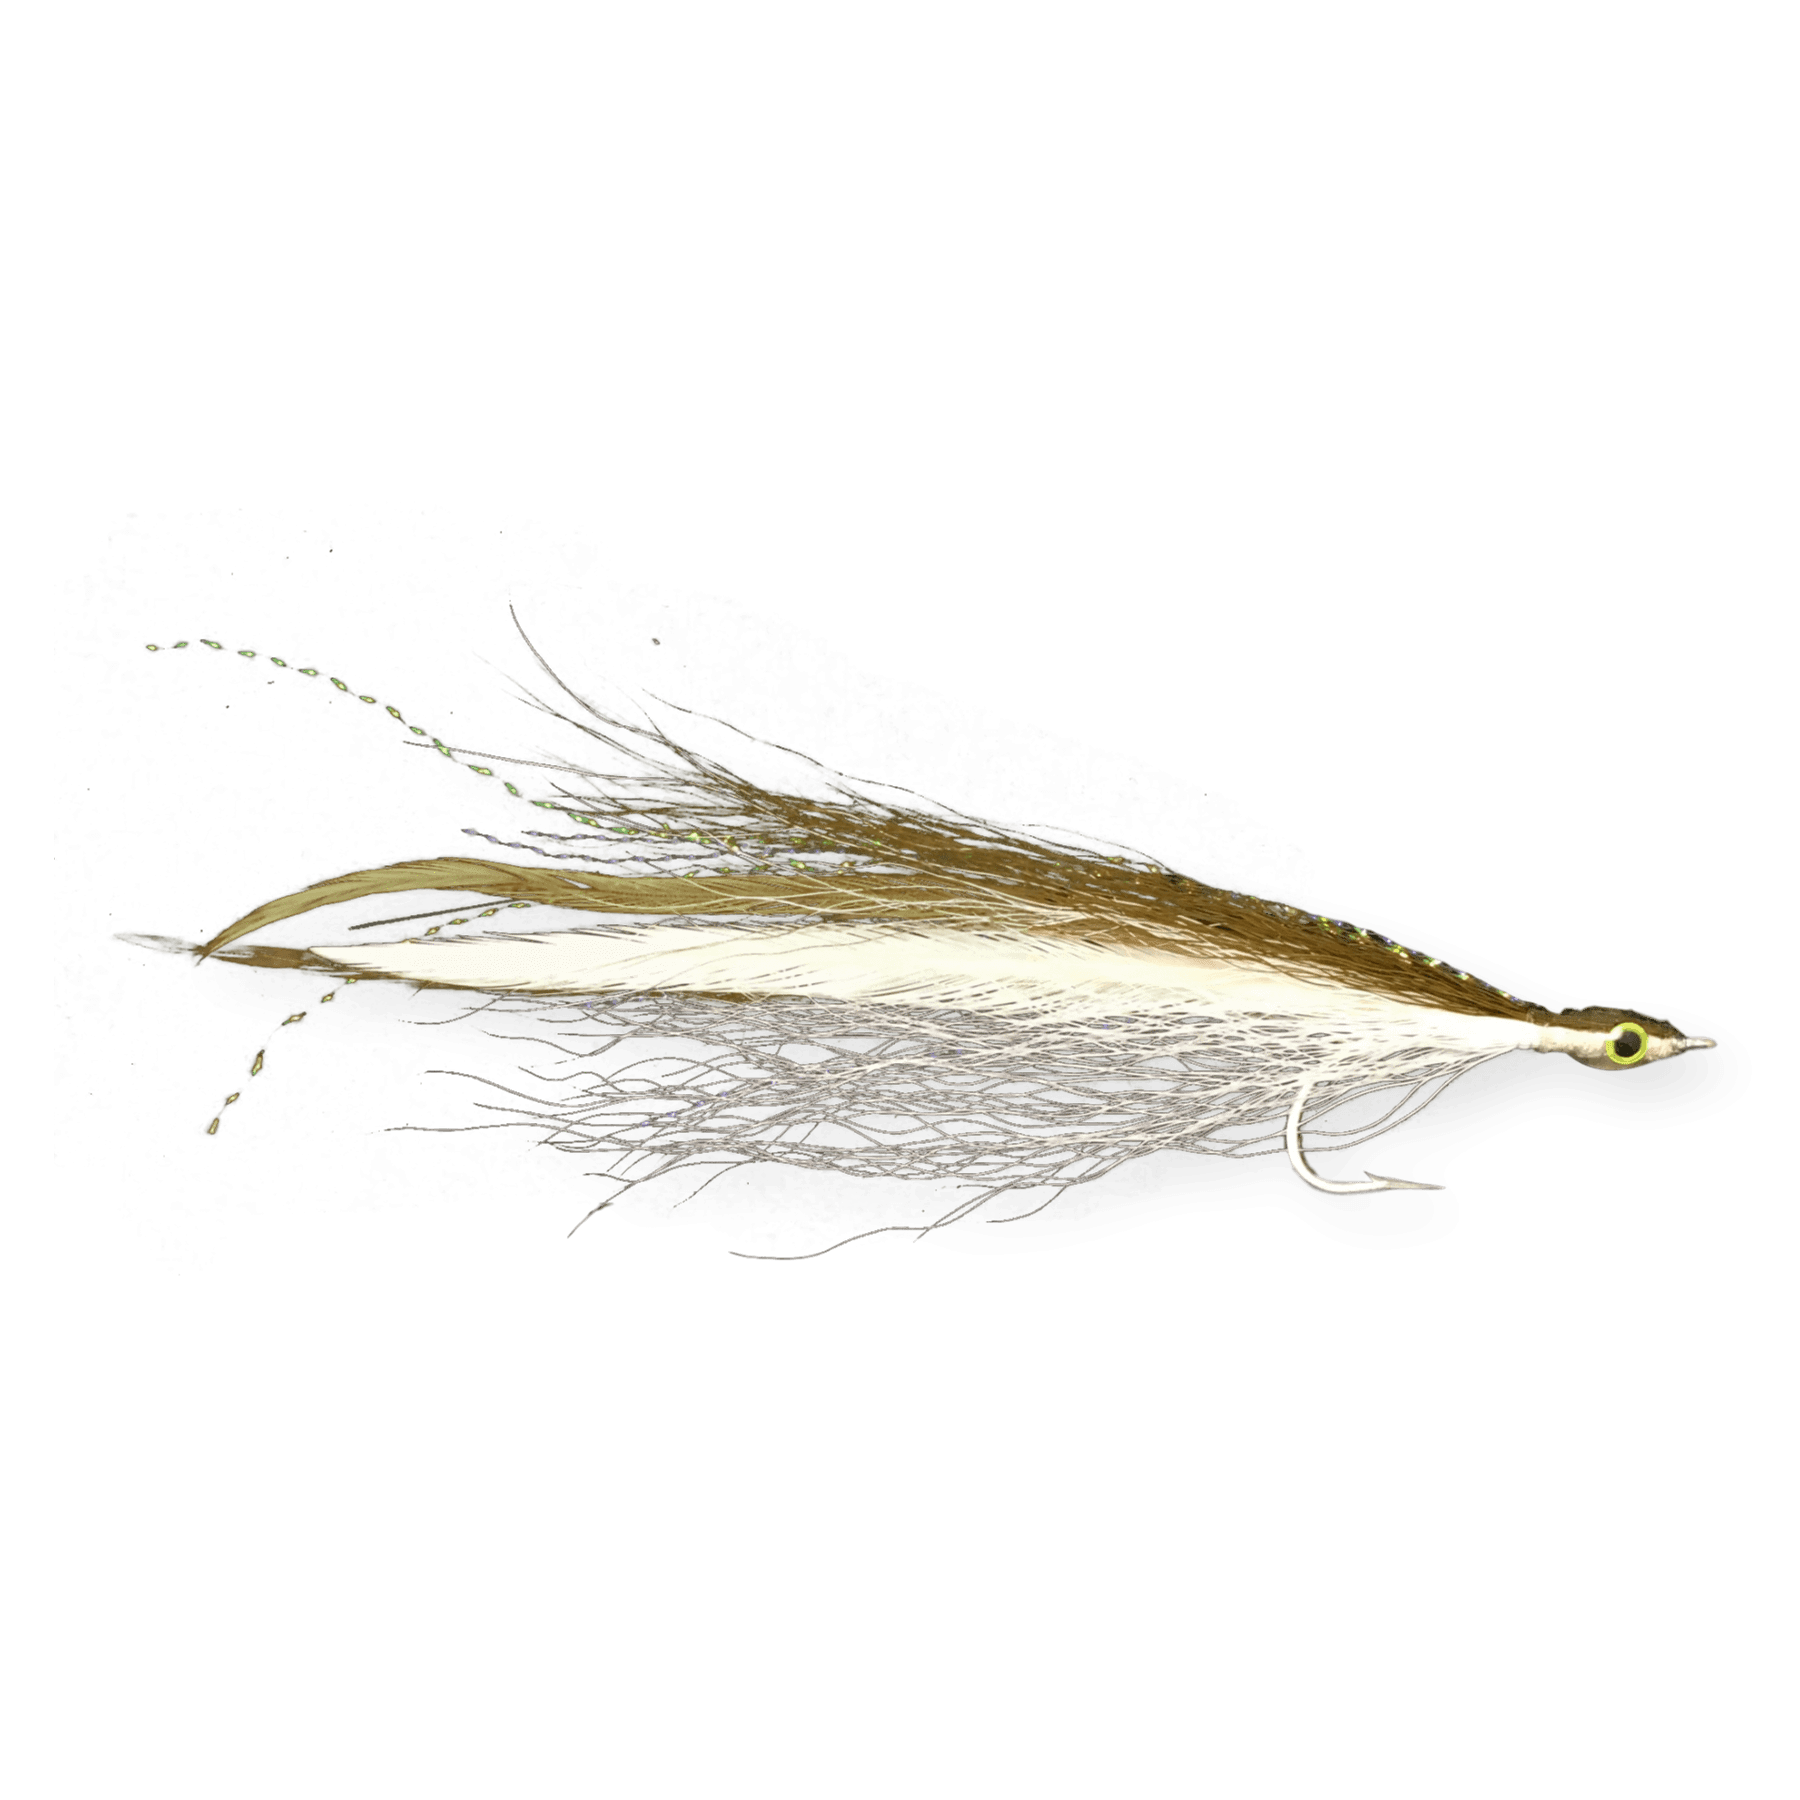 Penn Fishing - The Saltwater Edge